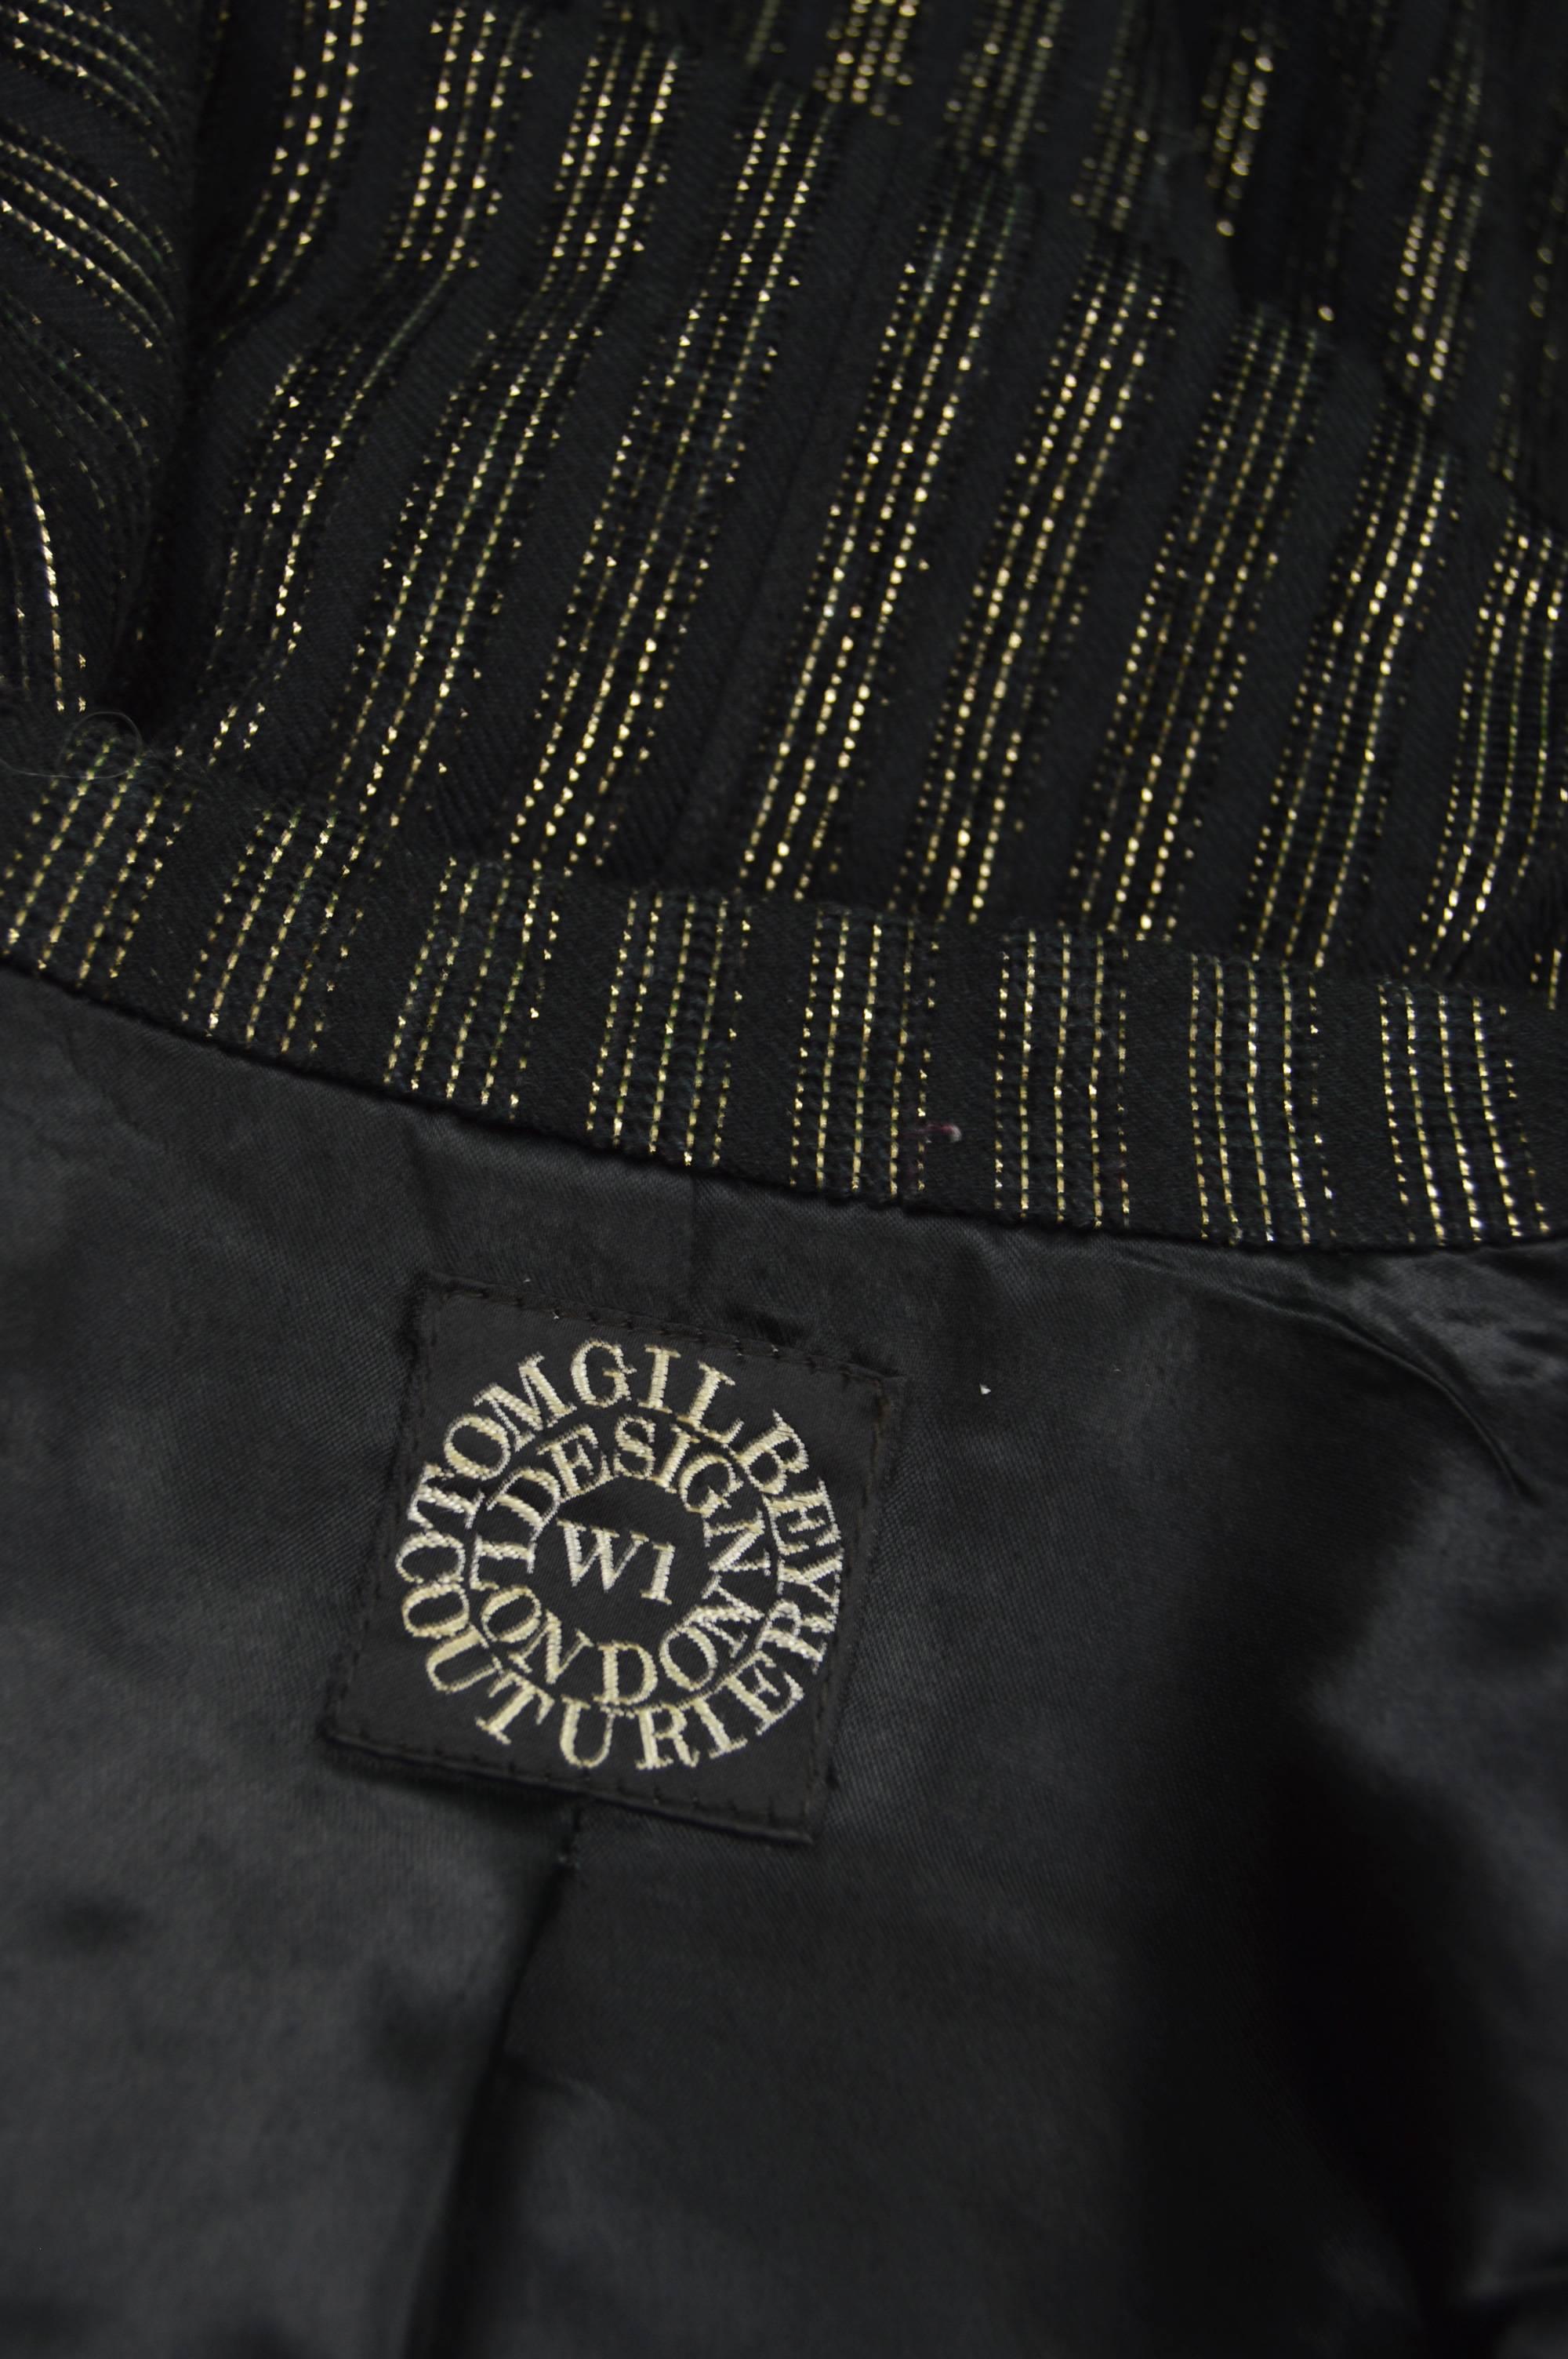 Tom Gilbey Men's Vintage Black & Gold Metallic Lamé Longline Jacket, 1980s For Sale 5